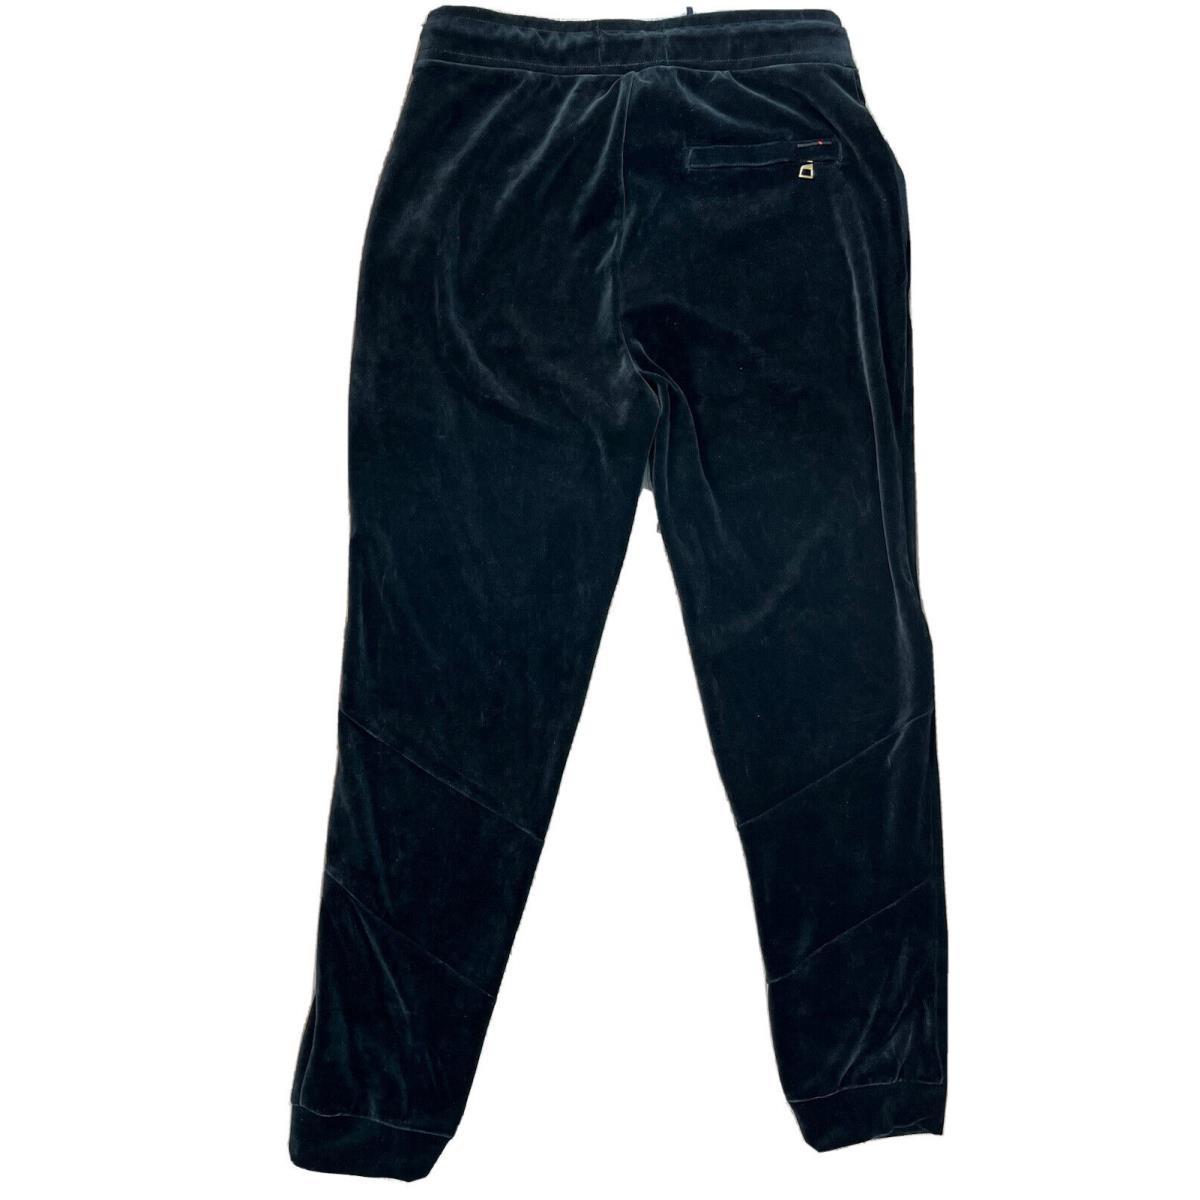 Jordan Mens Pants Velour Velvet Jogger Pants Black Gold AH2361-010 Rare Size S